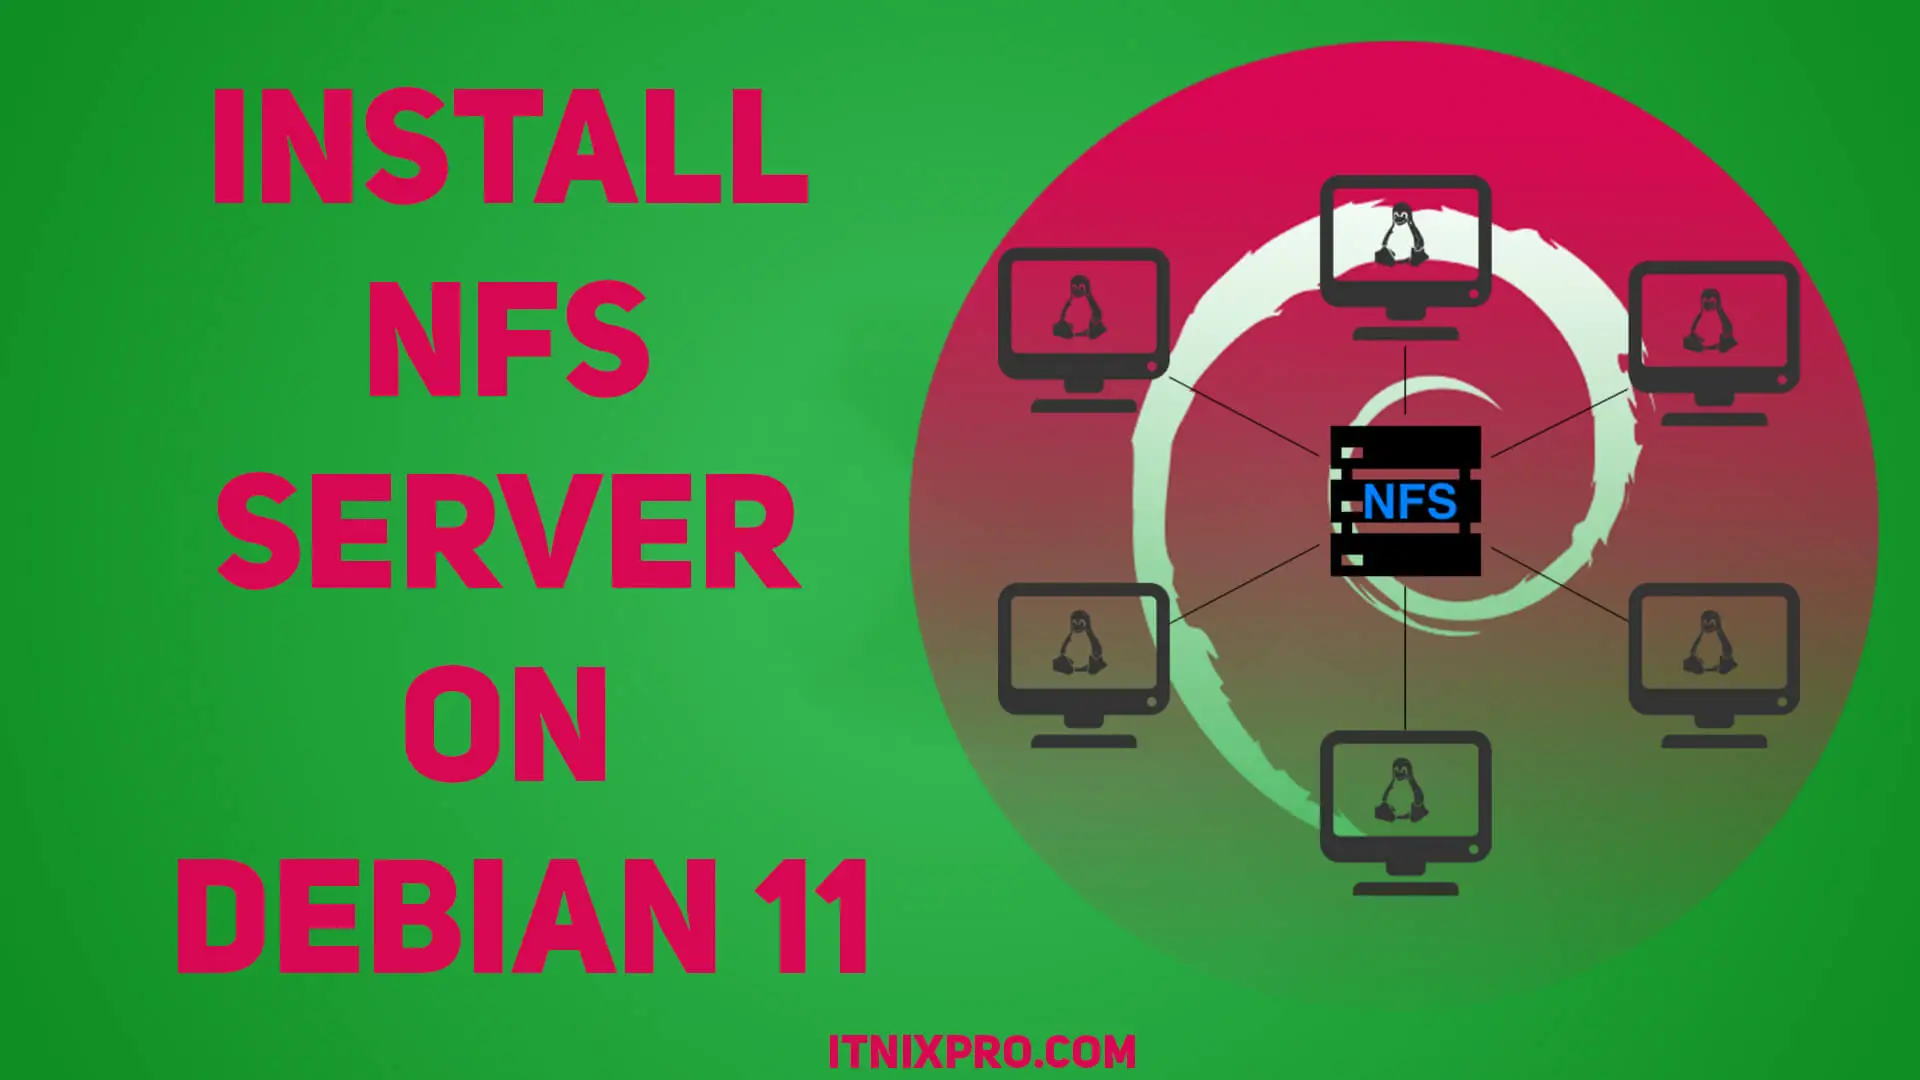 Install NFS Server on Debian 11